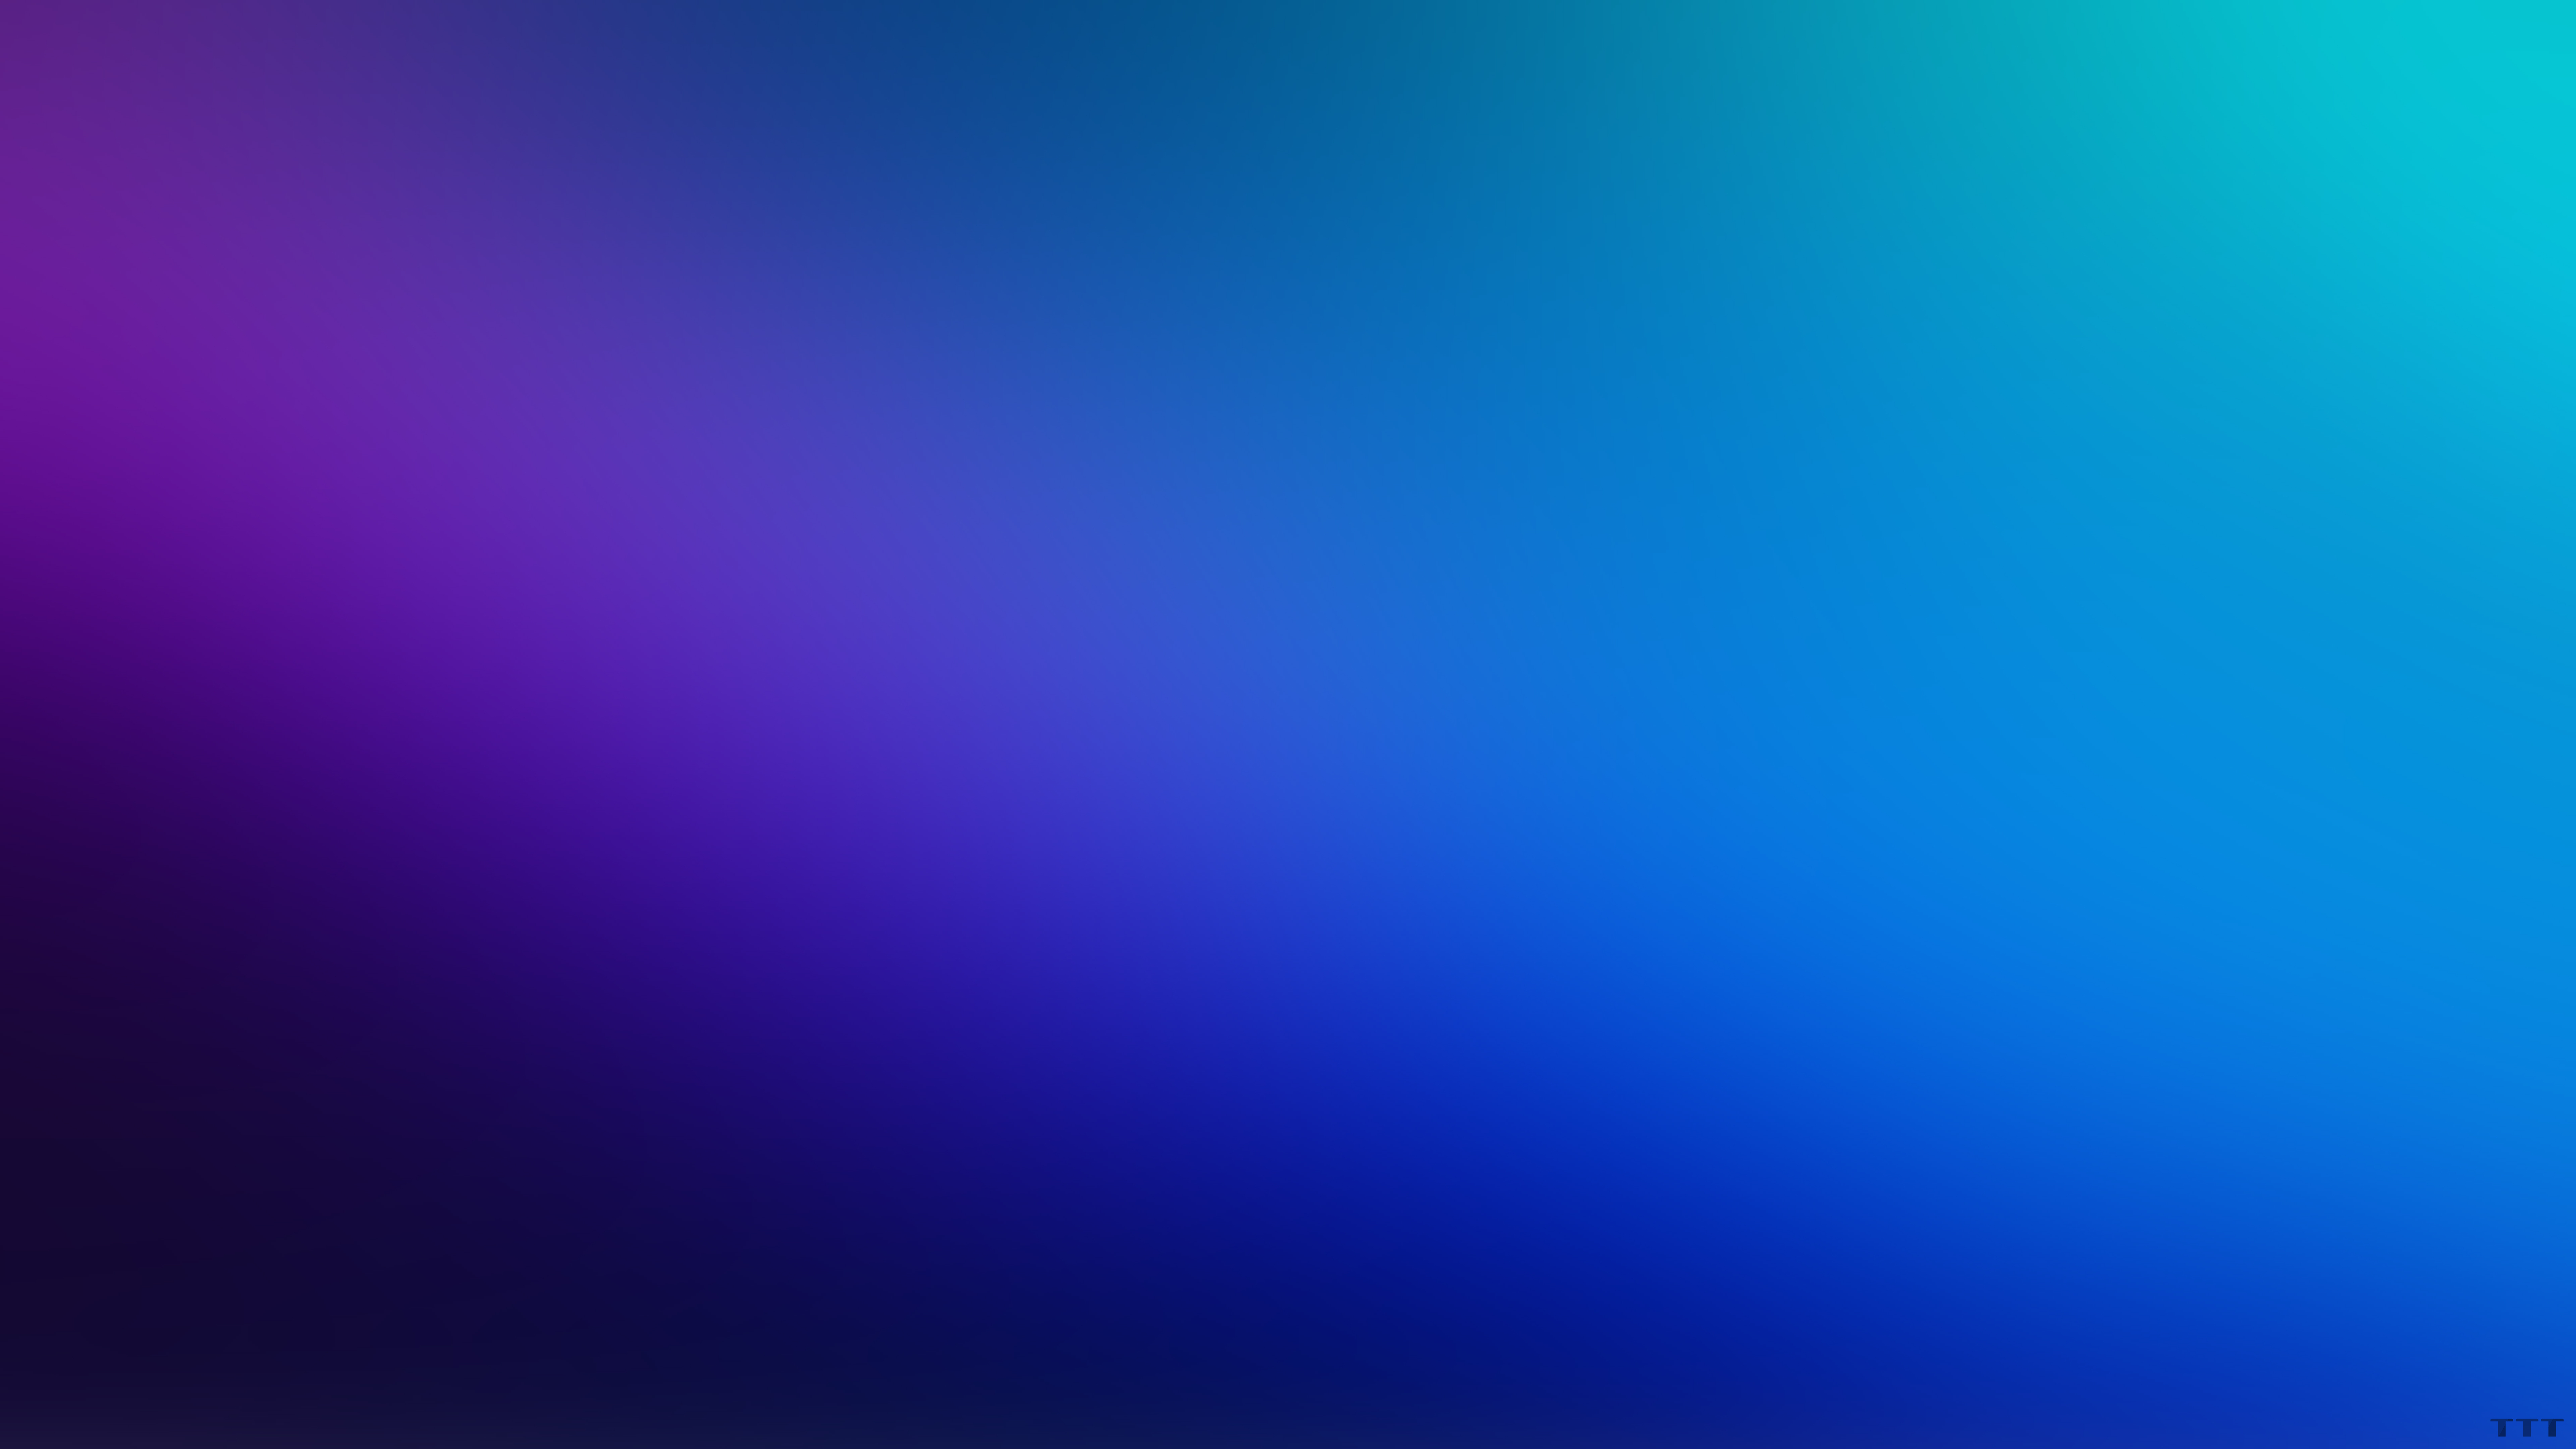 Purple Gradient Geometric Background Download Free  Banner Background  Image on Lovepik  401947918